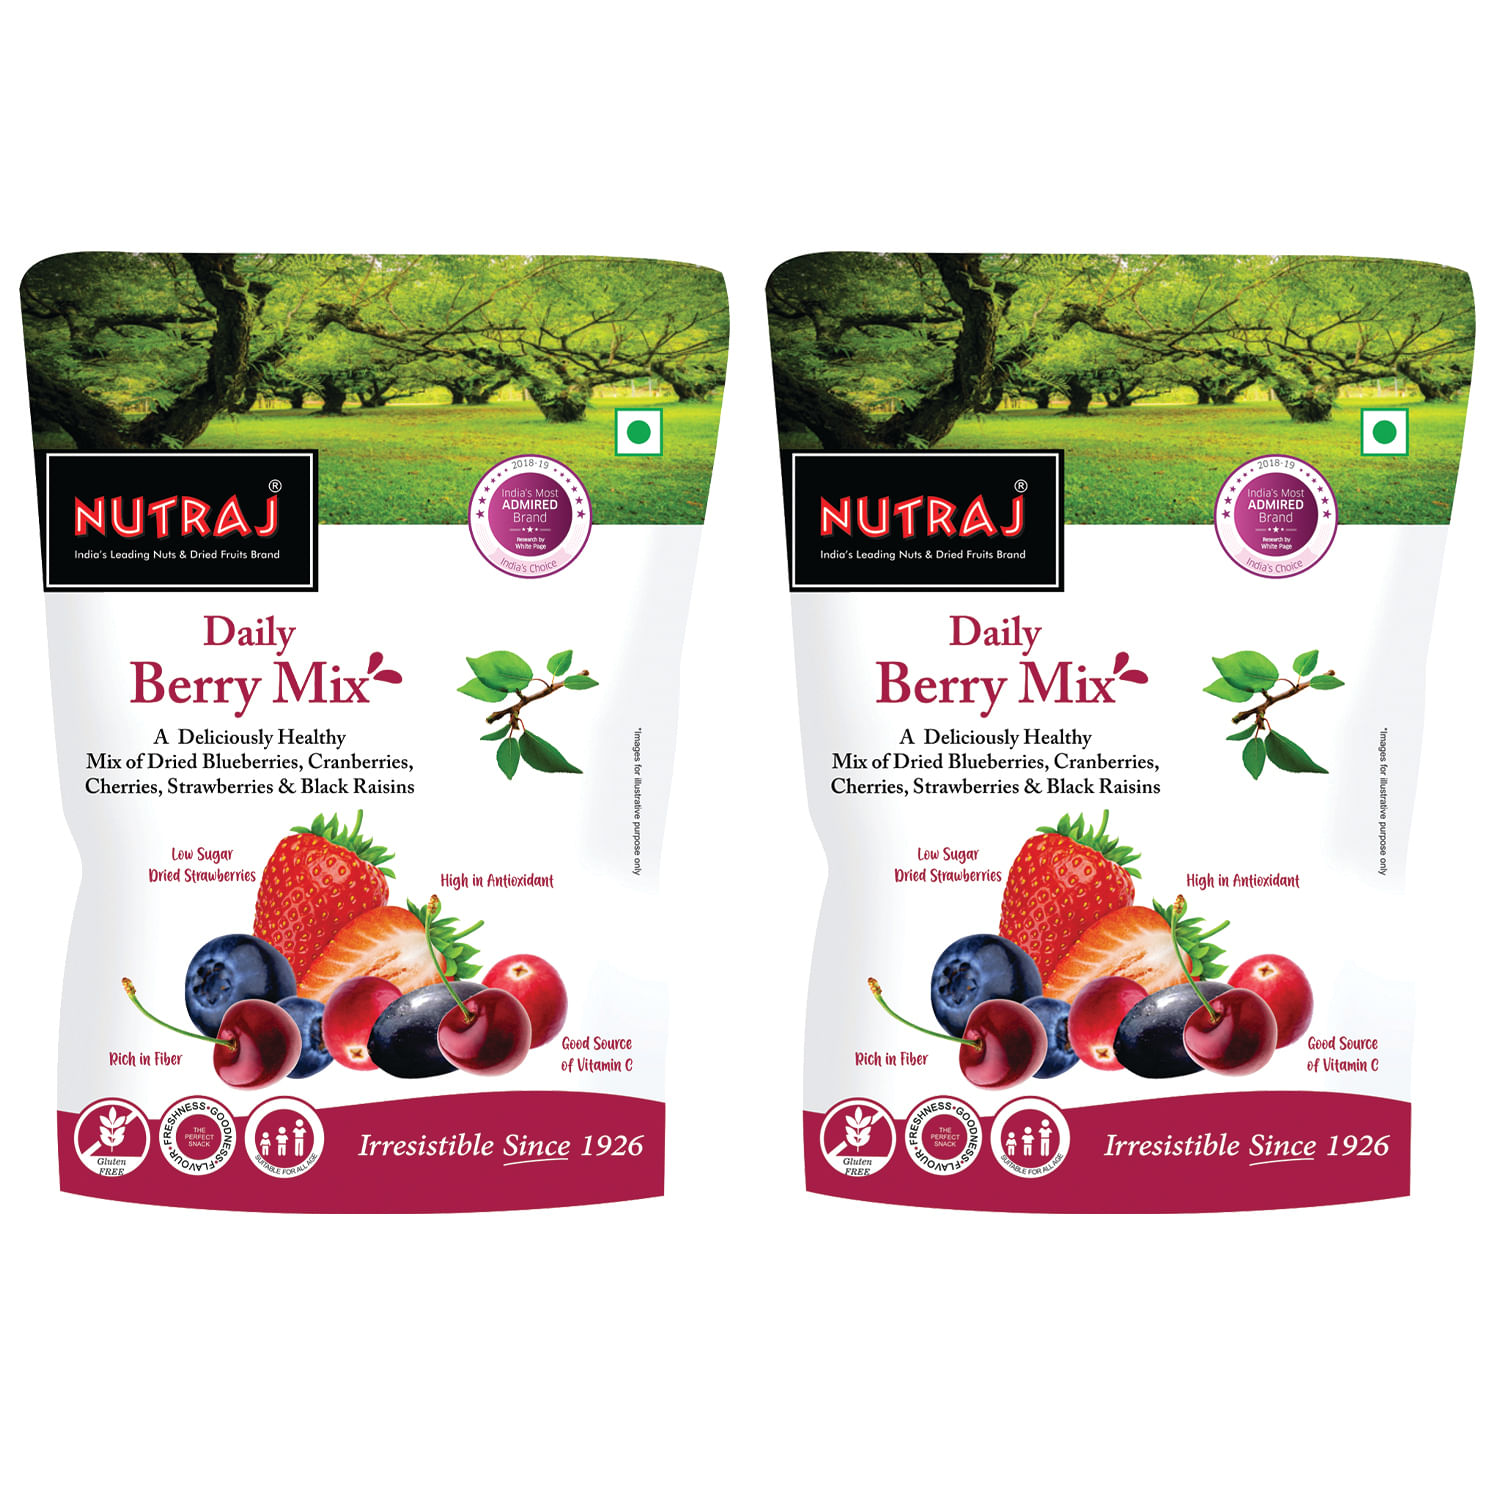 Nutraj Daily Berry Mix 400g (2 X 200g)